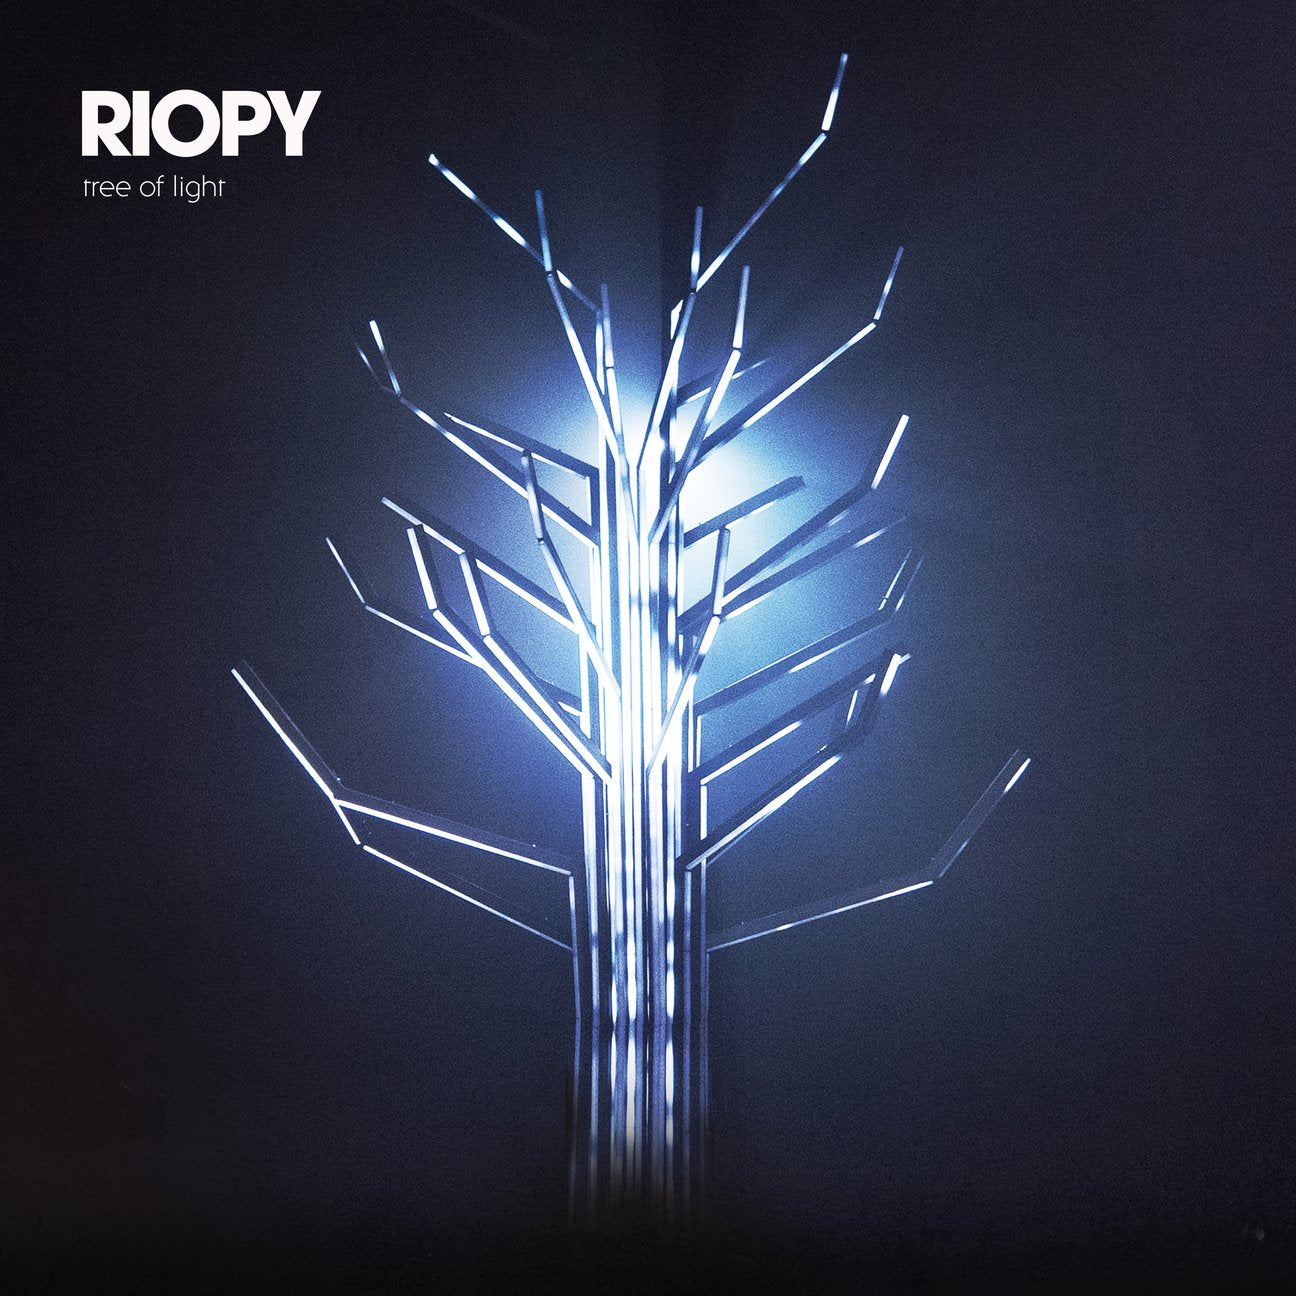 Blue Moon music sheet from RIOPY's Tree of Light album